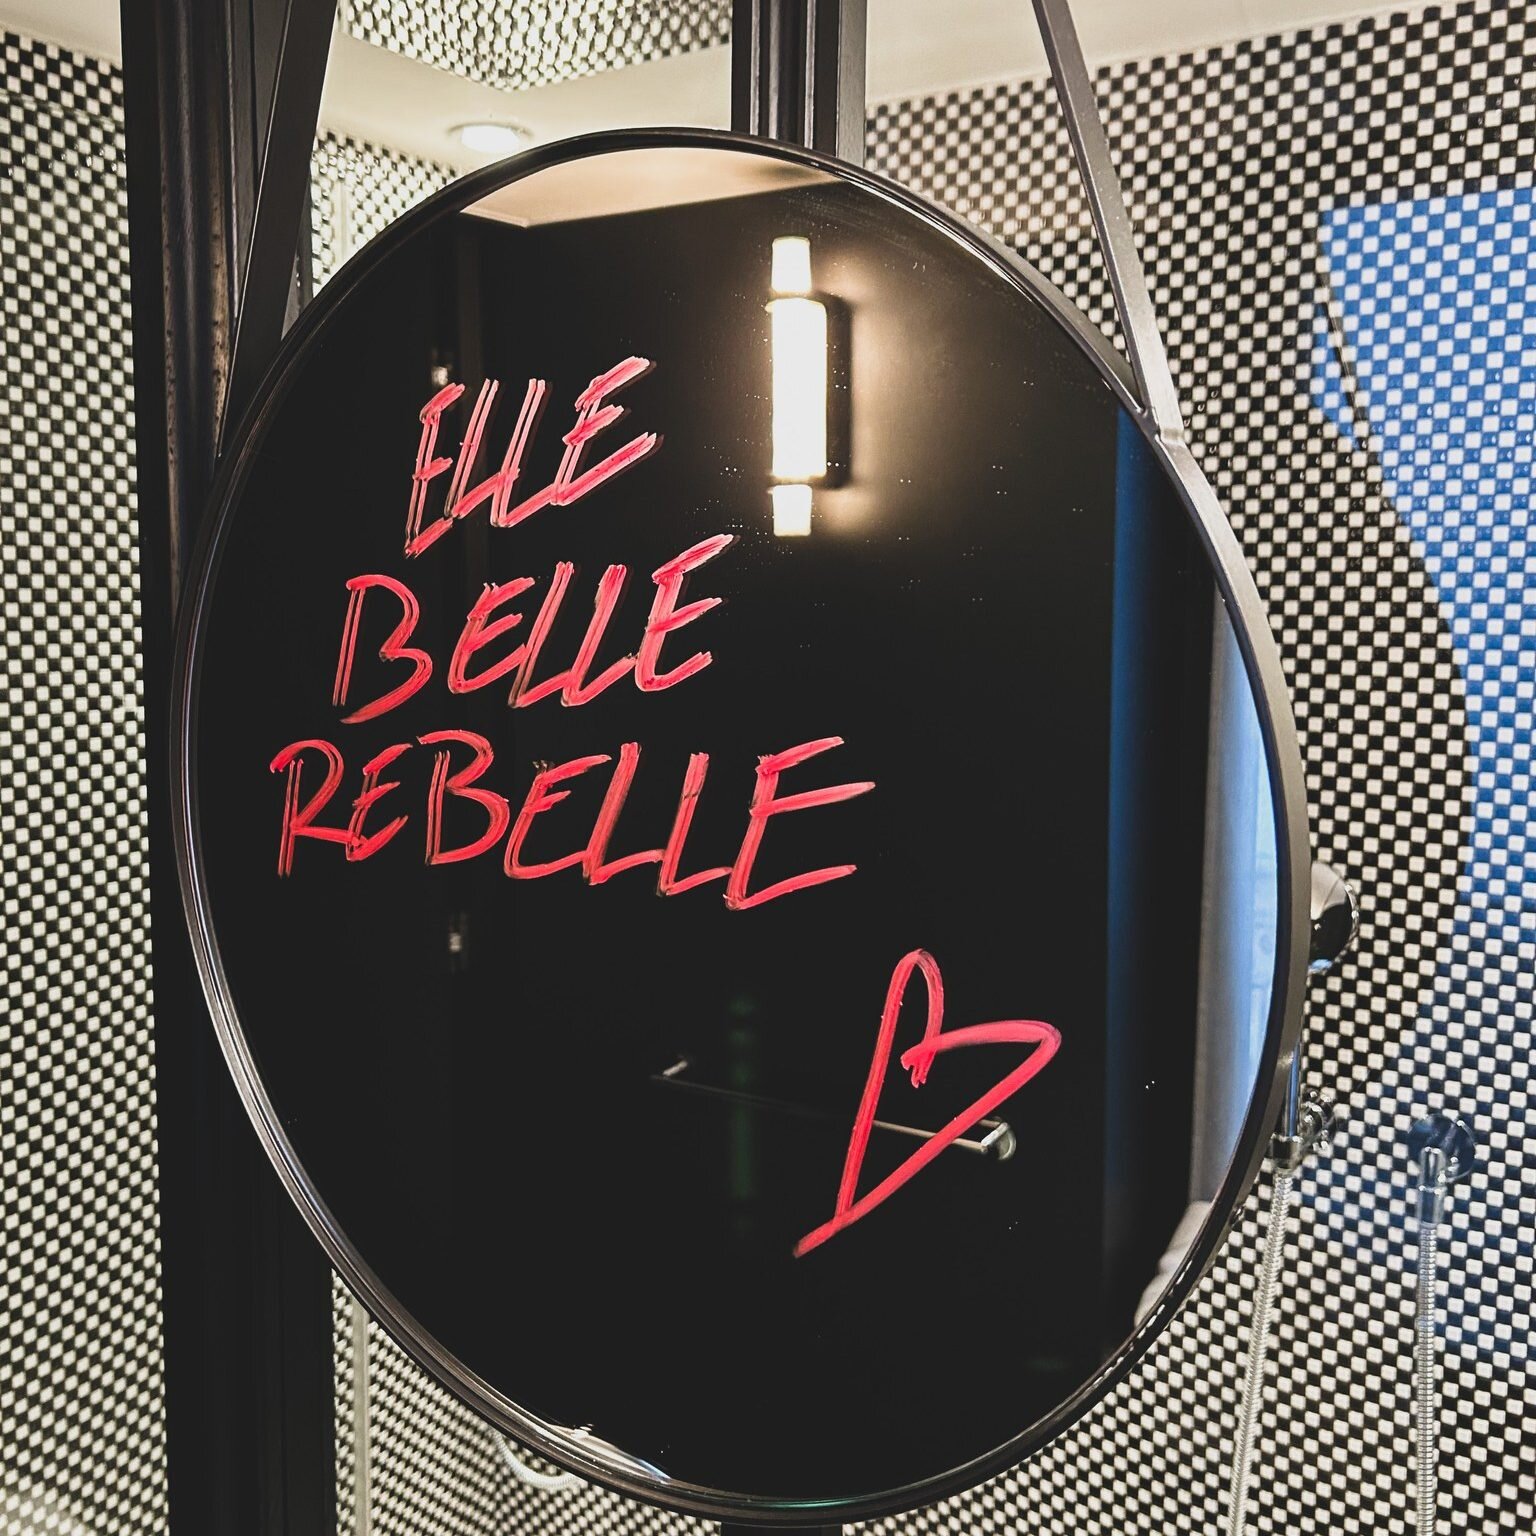 No caption needed.... 💋

-
 #ELLE #belle #rebelle #ellebellerebelle #parisvibes #parislovers #ellebeauty #ElleSpa #frenchartdevivre #parisianmood #elleexperience #ellefrance #maisonelleparis #maisonelleparisetoile #ellearoundtheworld #paris #parisia